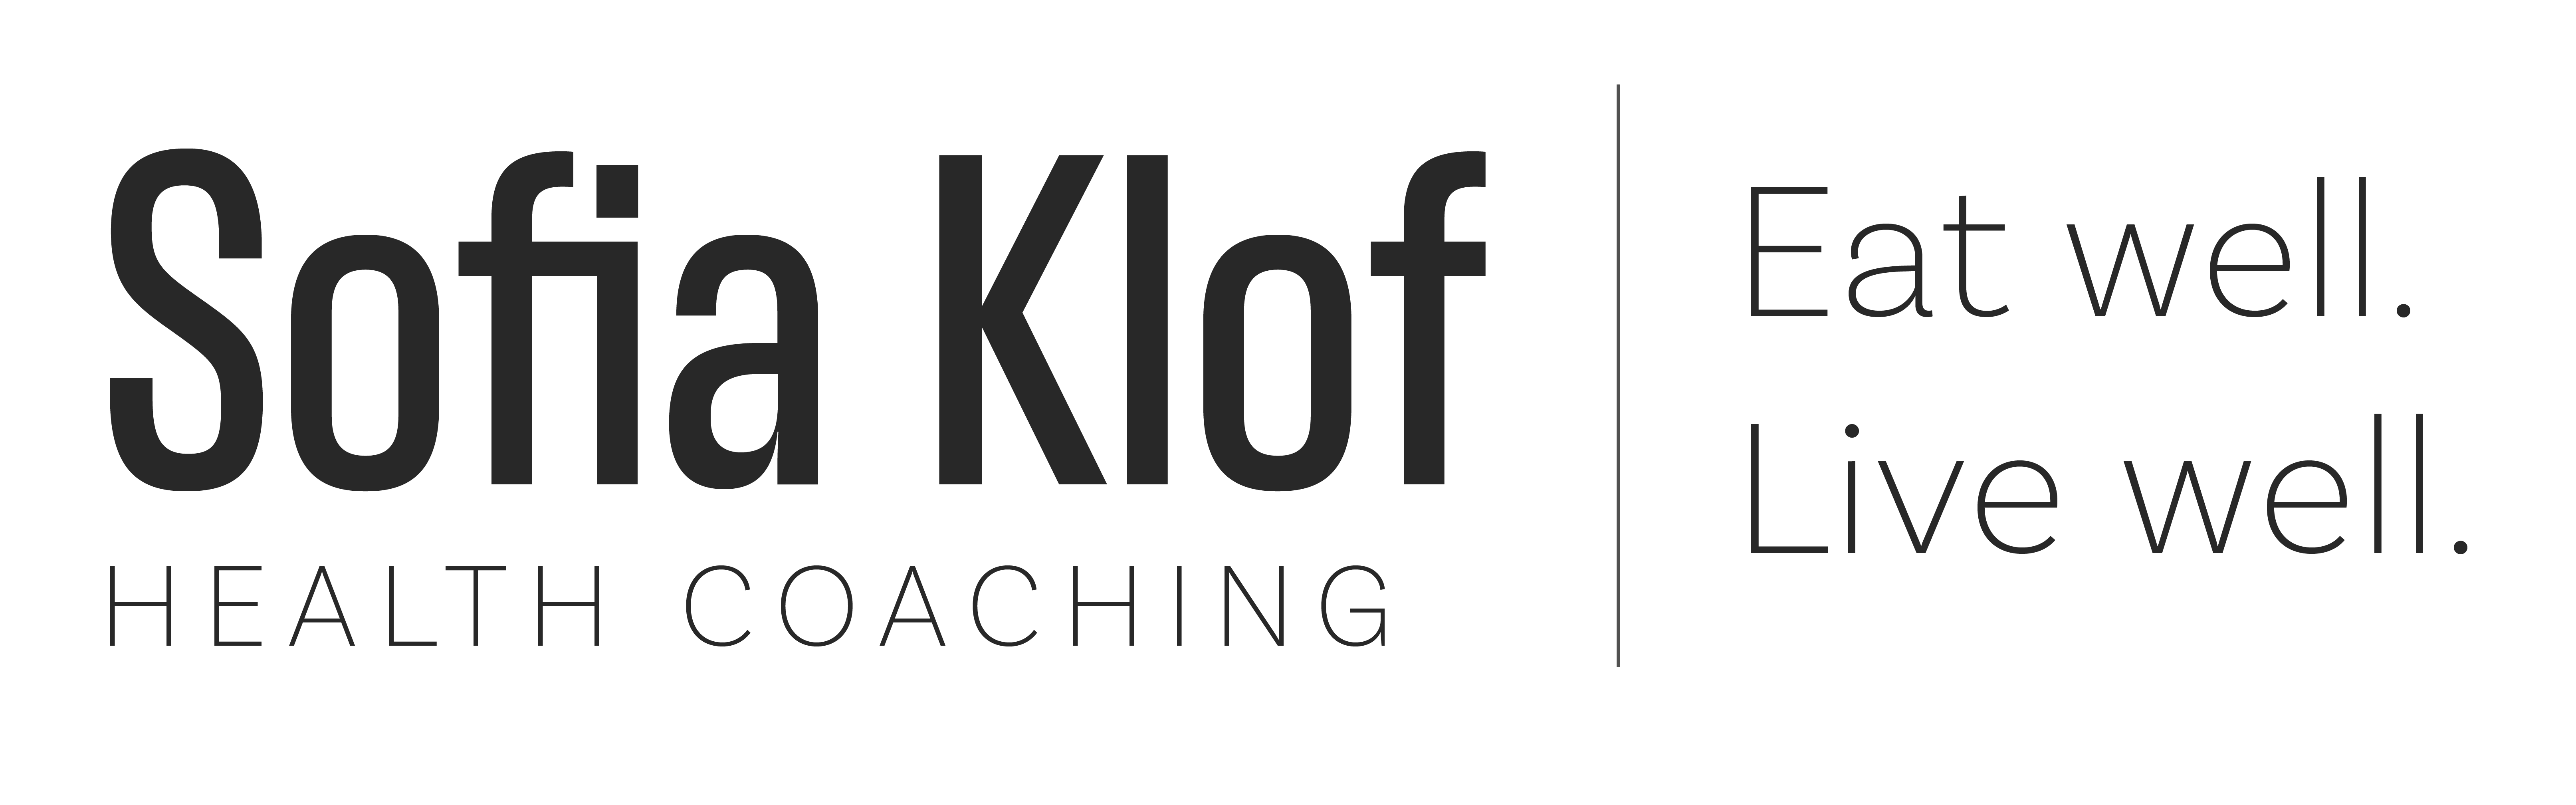 Sofia Klof Health Coaching